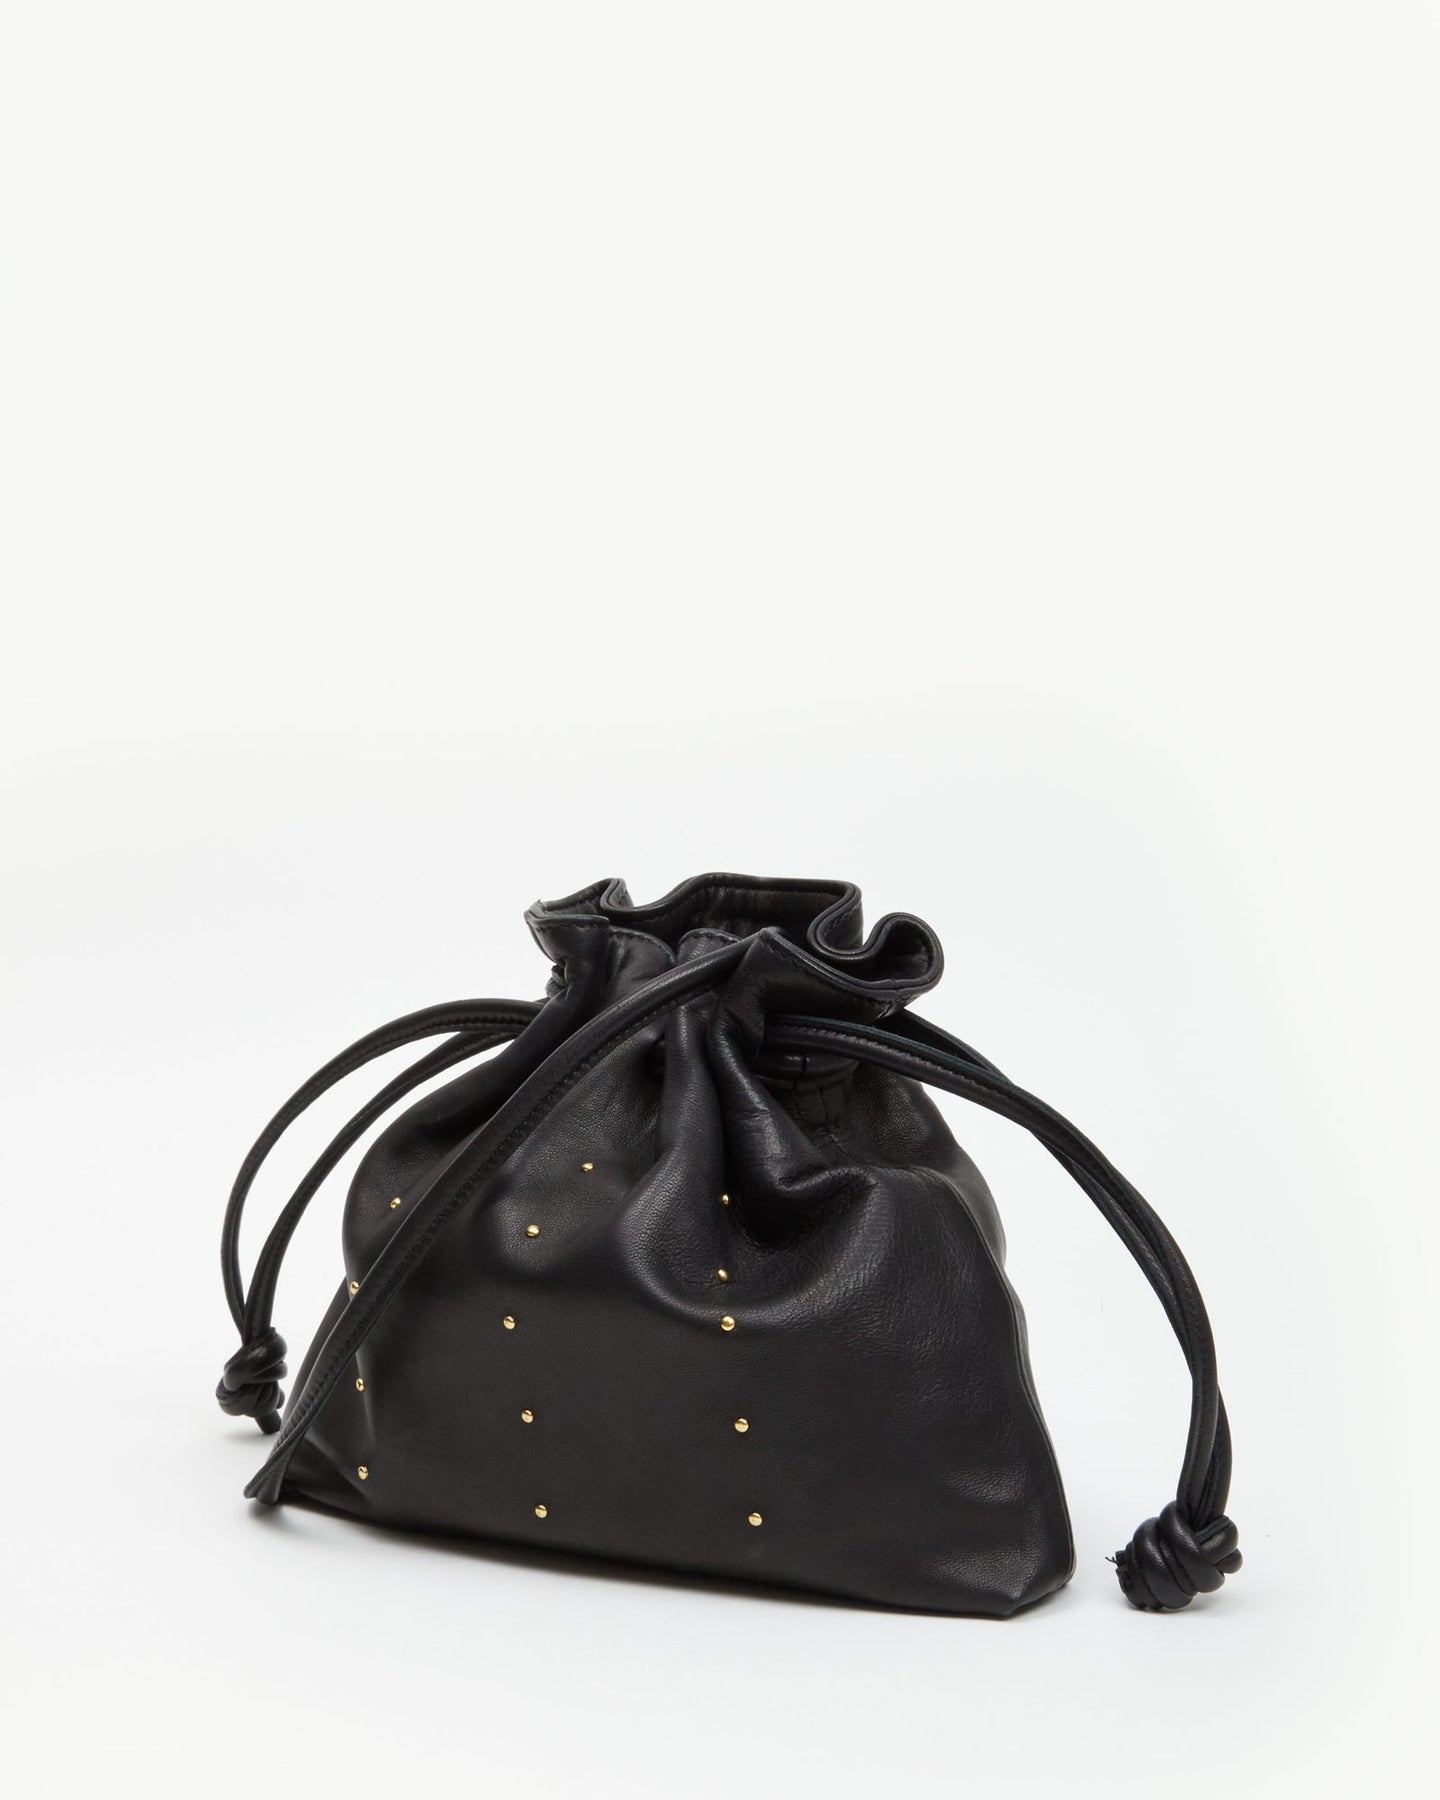 Clare V. Petit Henri Handbag - Black with Studs